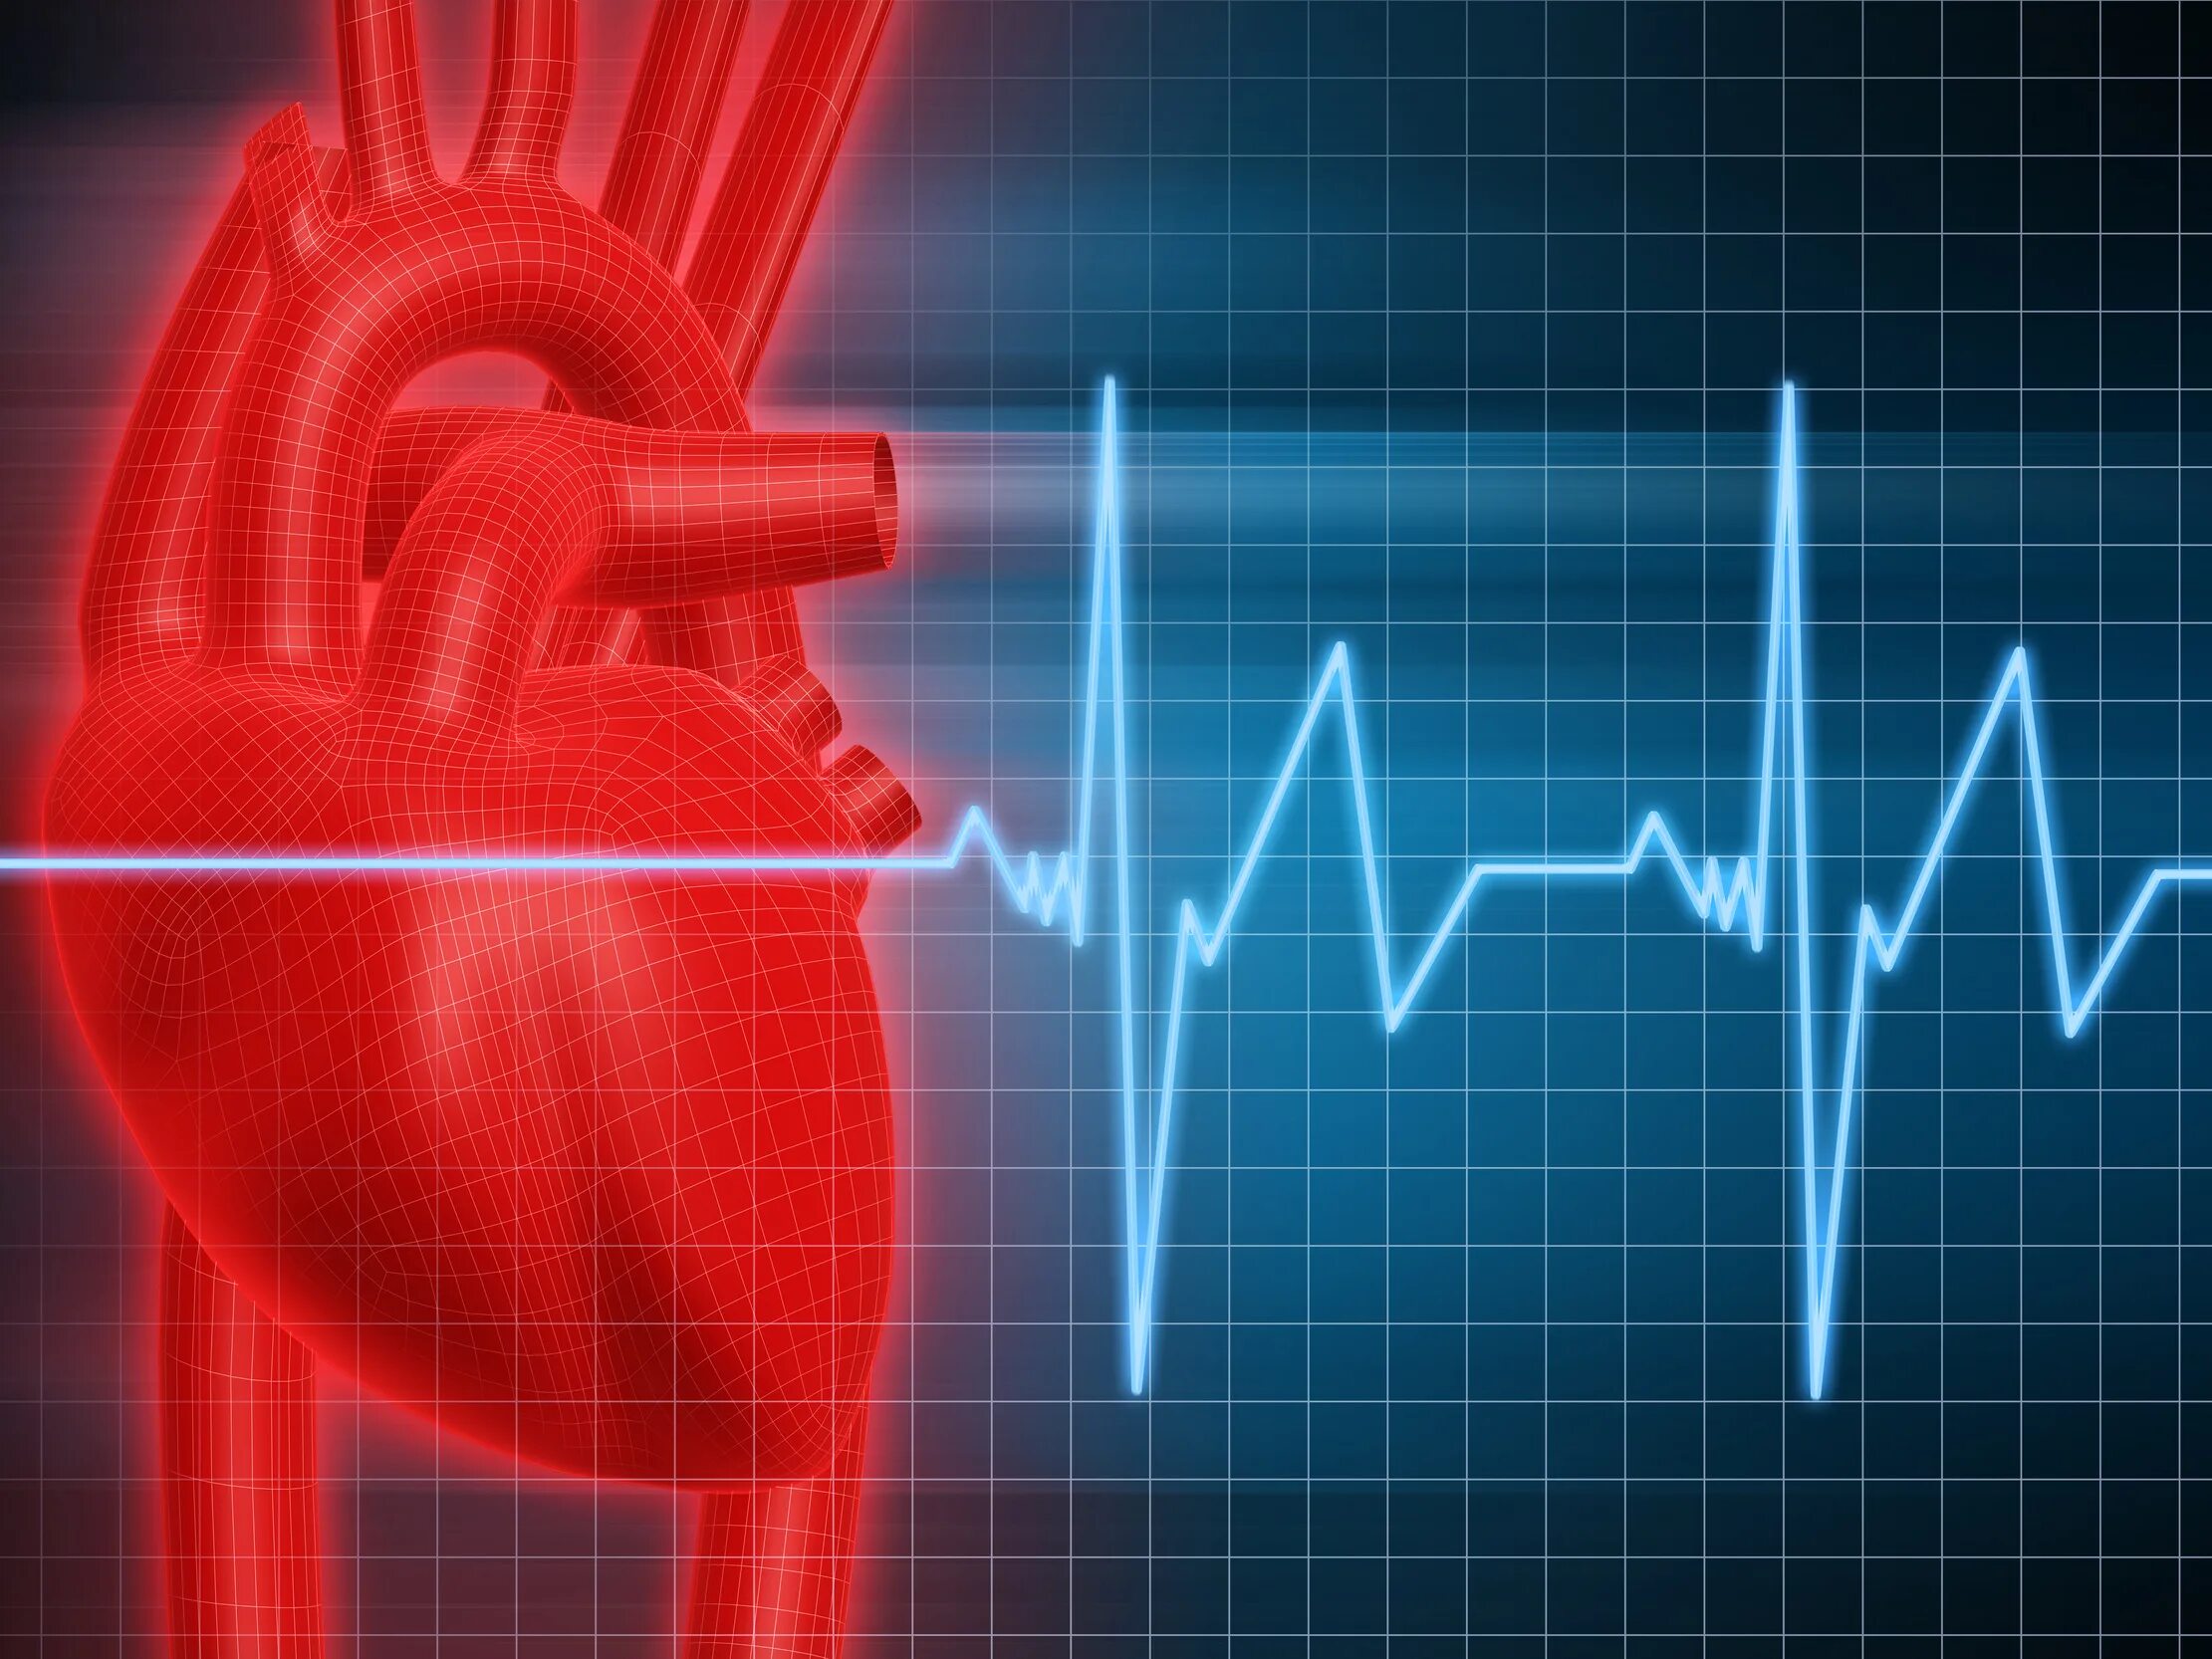 Усилилось сердцебиение. "Ритм" (сердечный). Кардиология аритмии. Нарушение сердечного ритма.